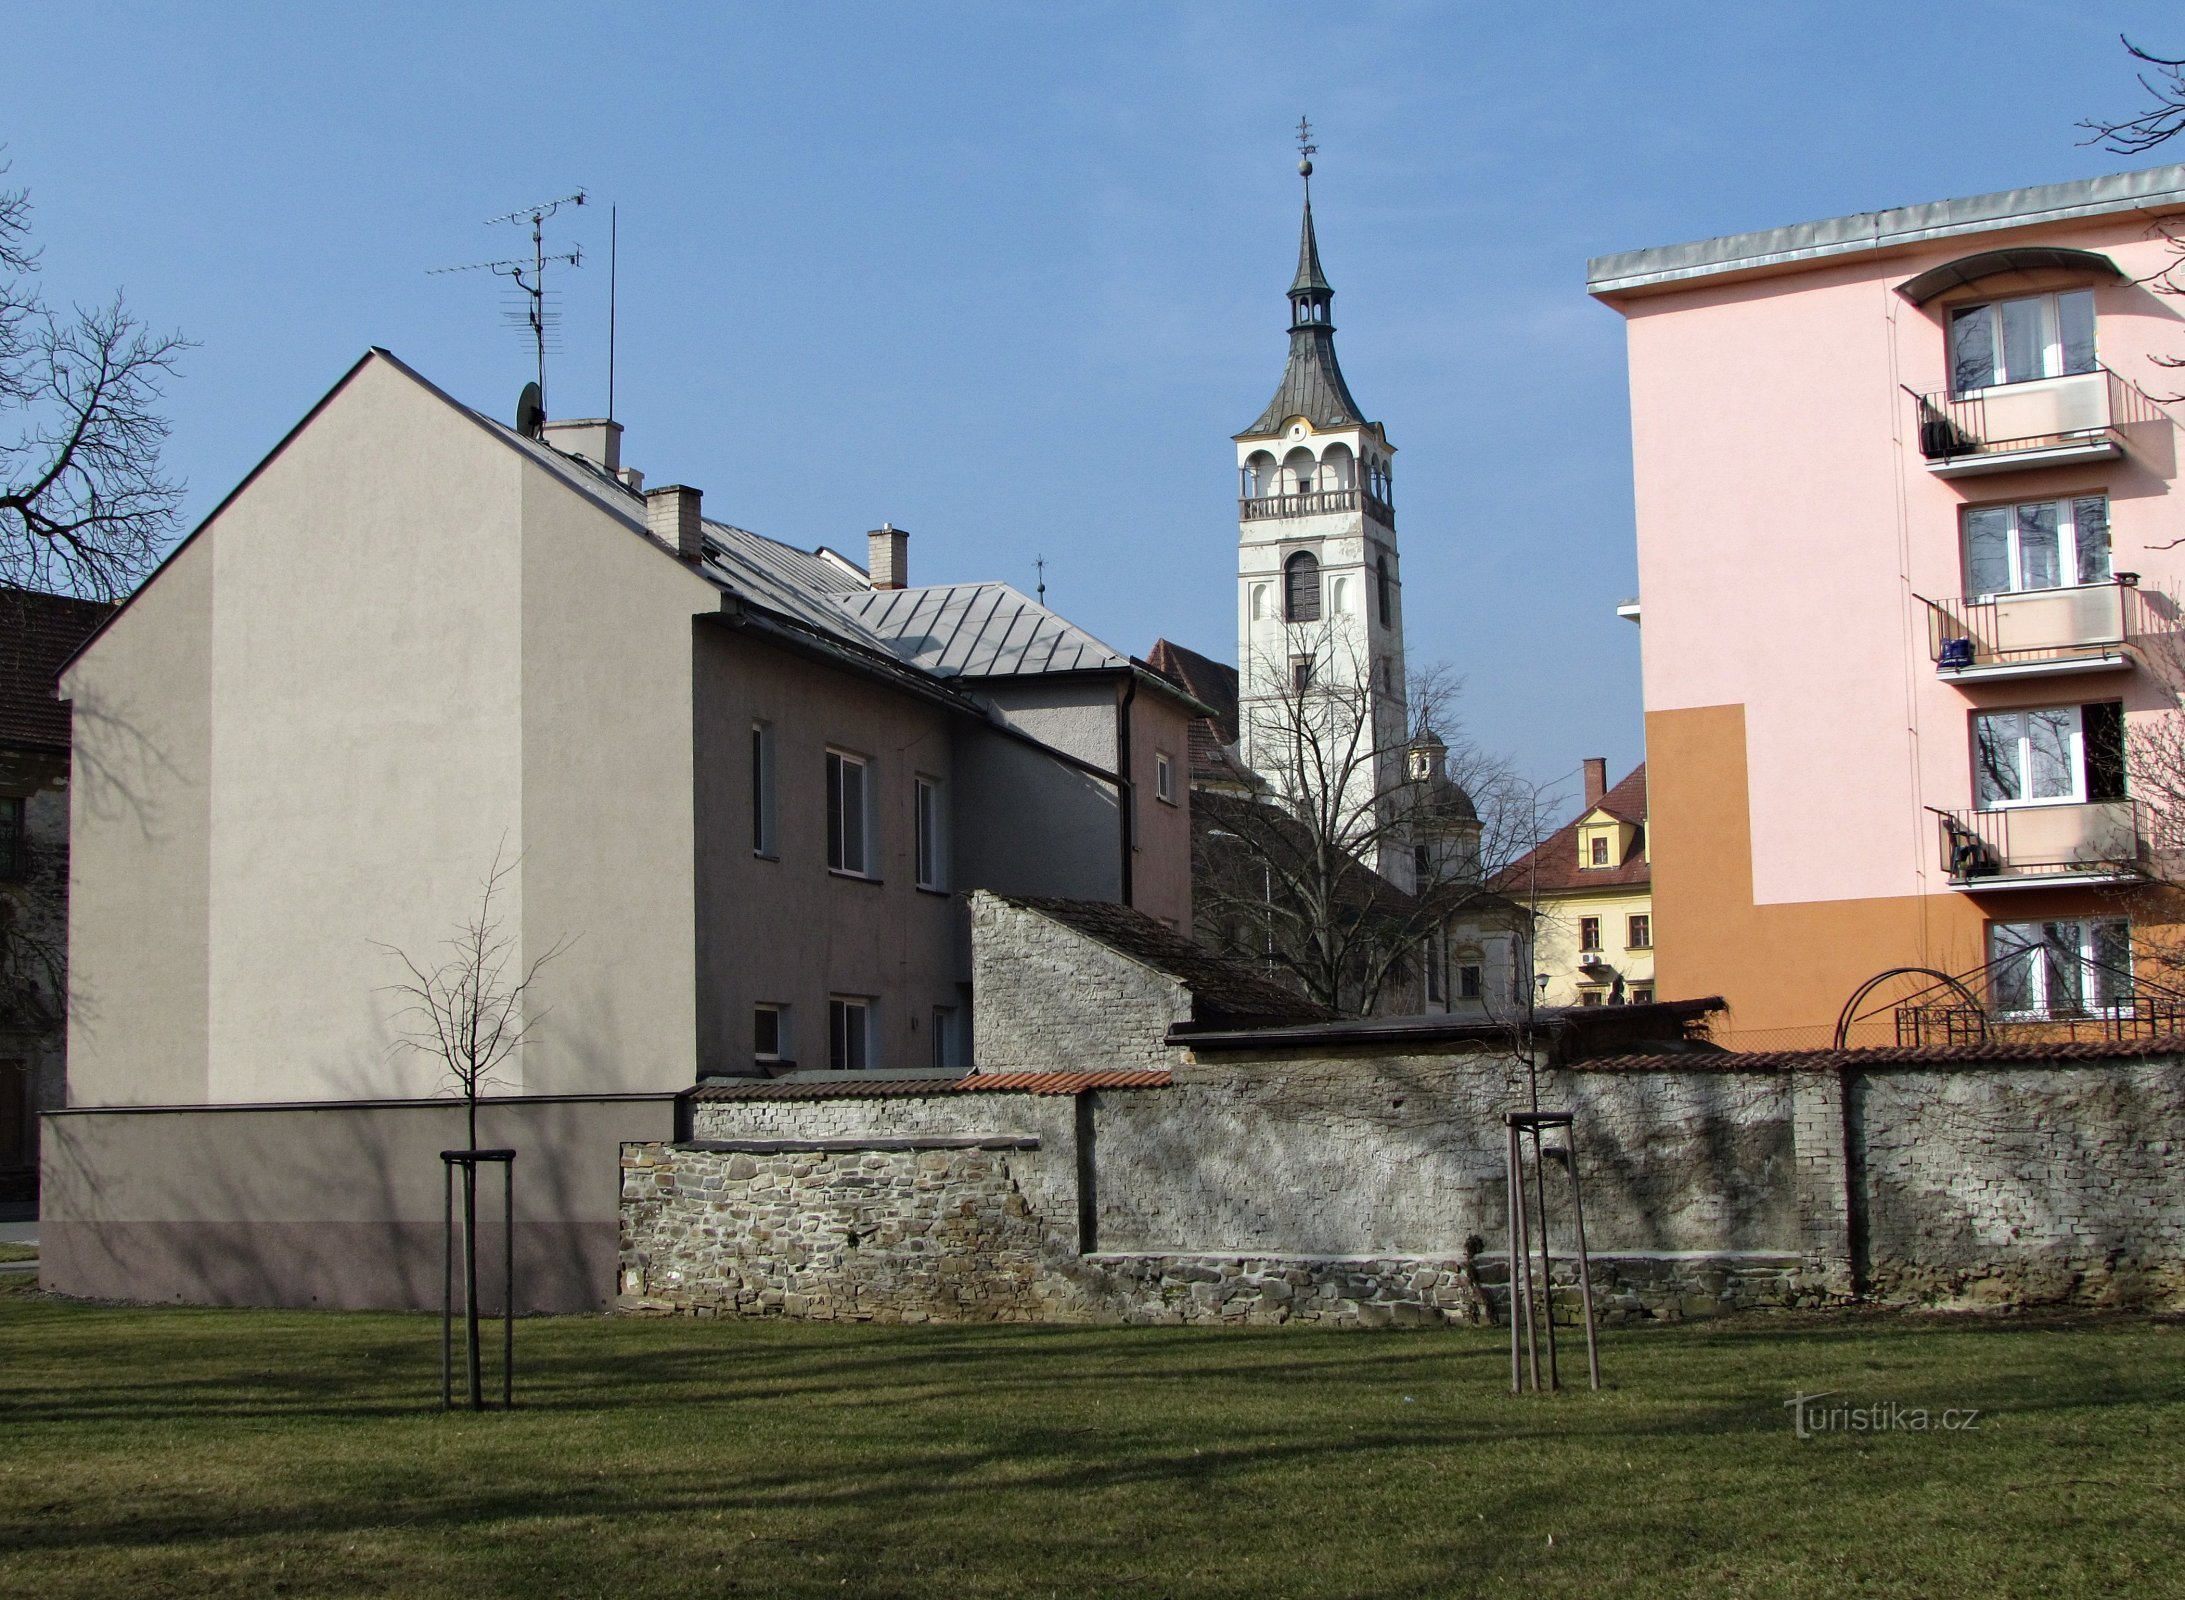 Lipník nad Bečvou - the church of St. Francis Serafinský and the former Piarist college